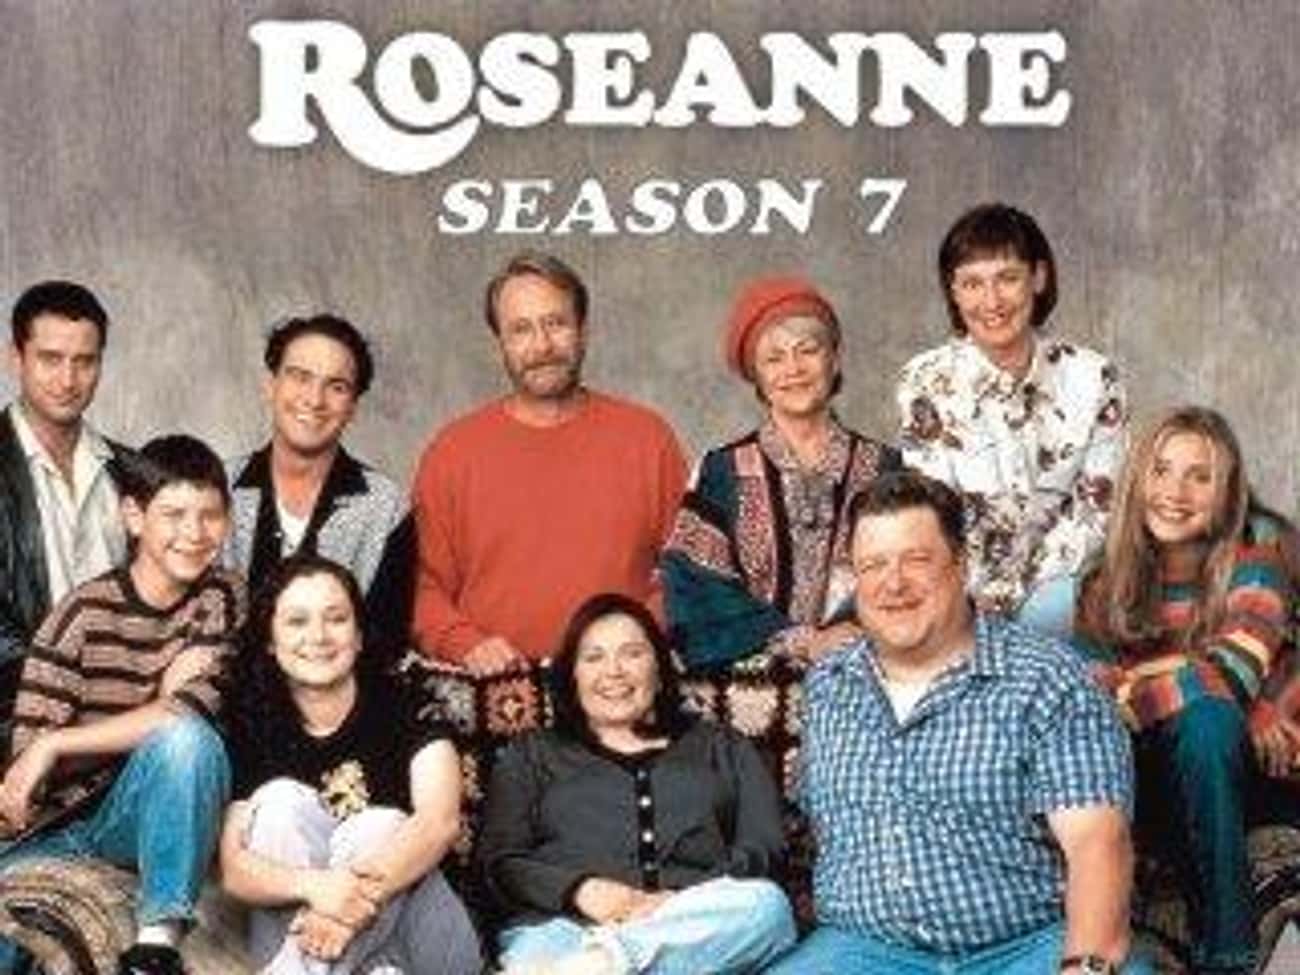 Roseanne Season 7